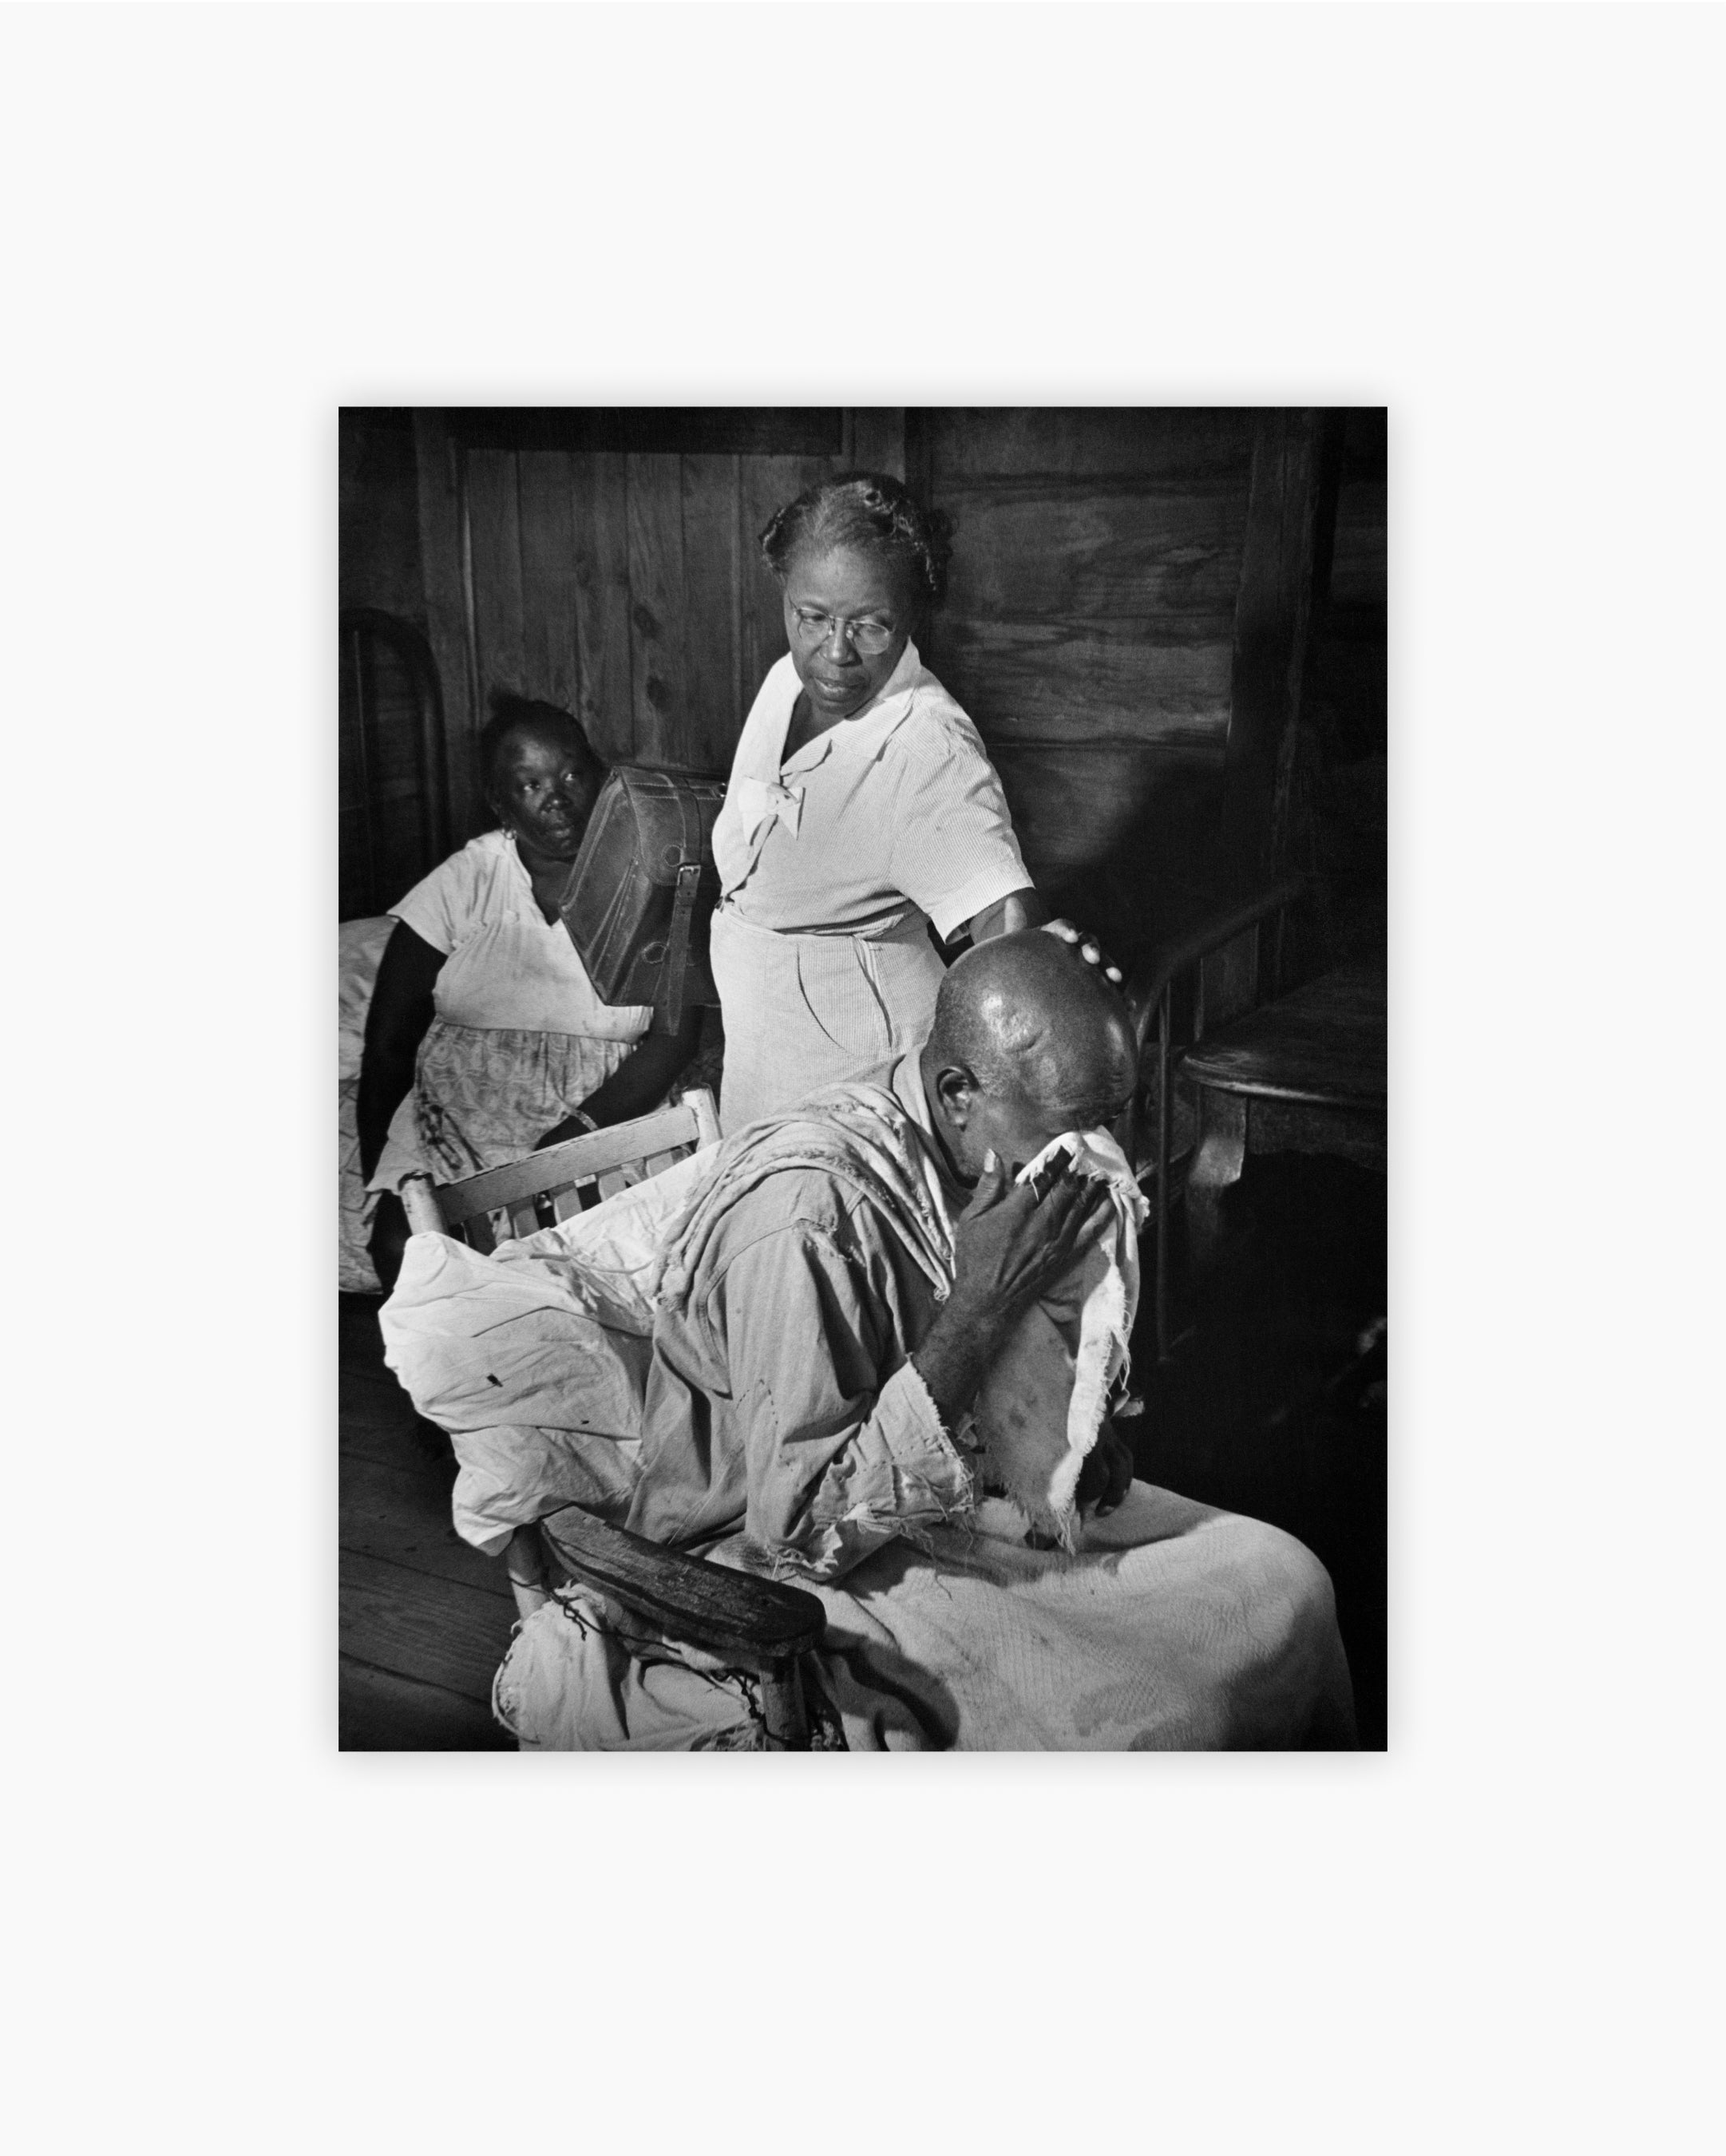 Nurse Midwife. Berkeley County, South Carolina, 1951